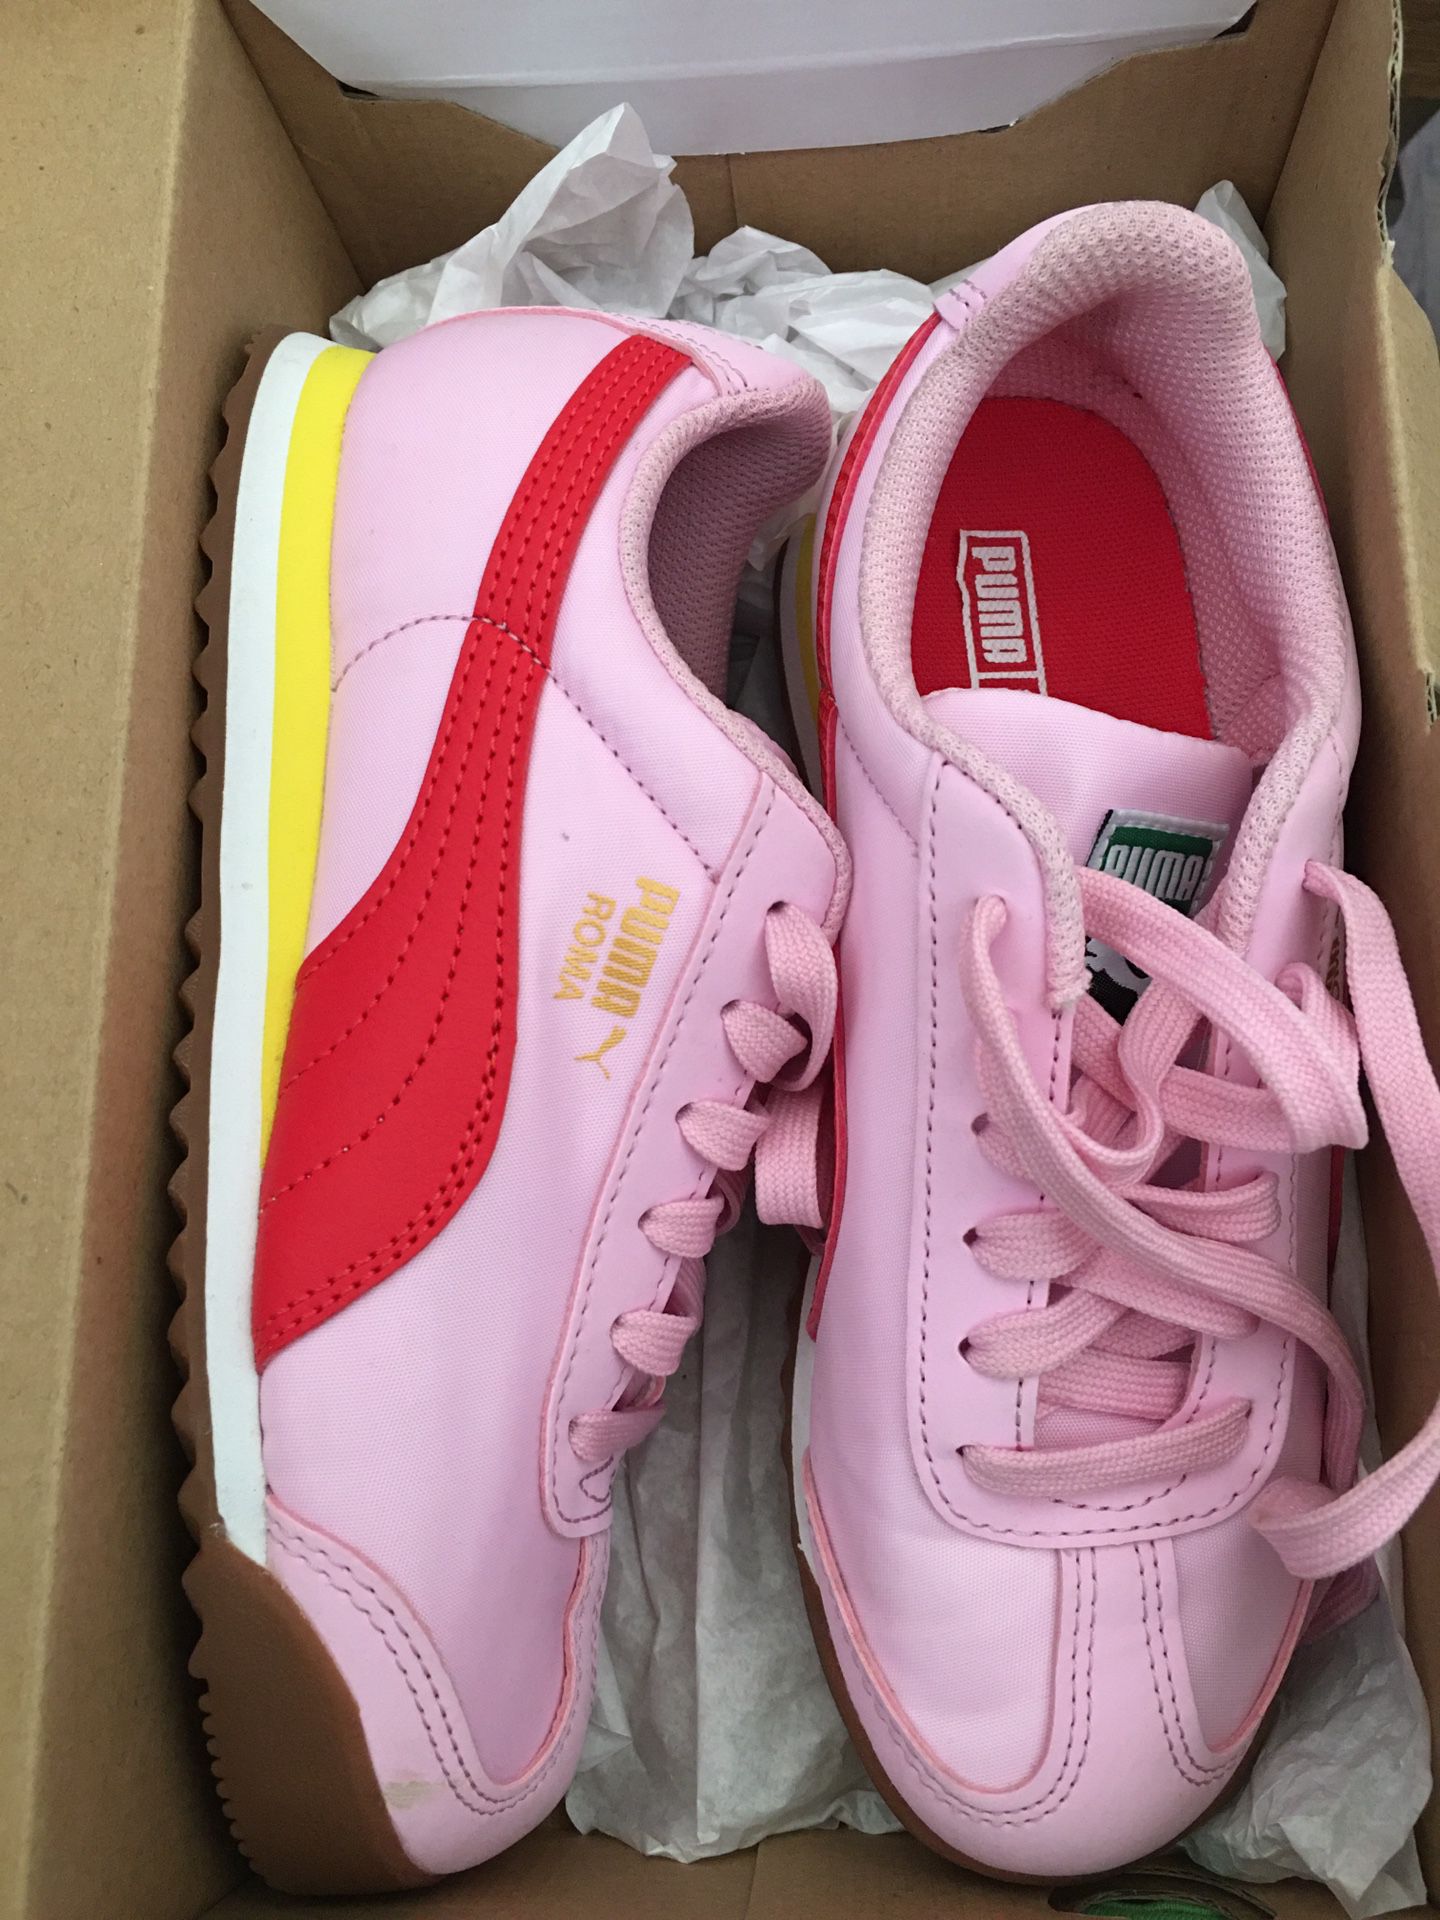 New Puma Girls Tennis Shoes Size 2c